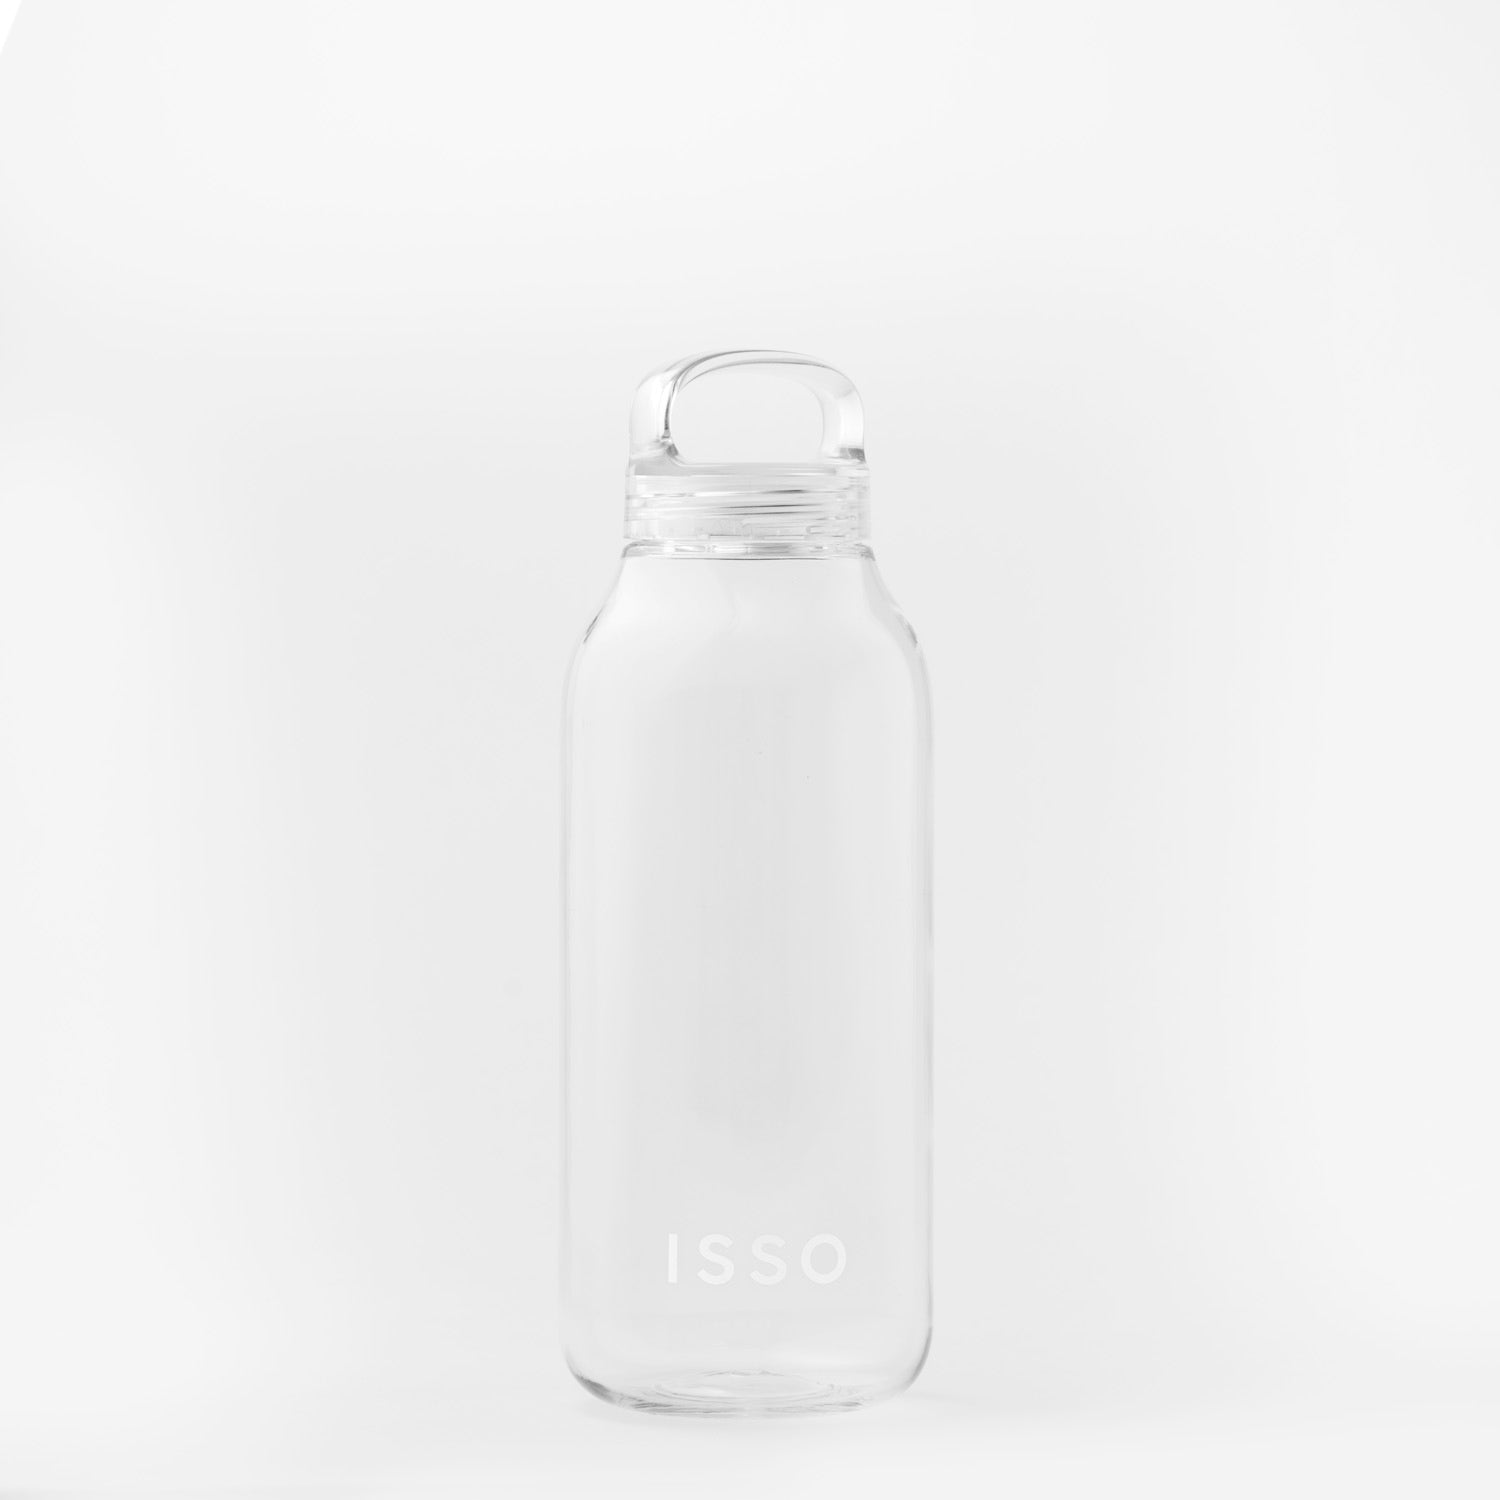 ISSO Hydration Flask 500ml